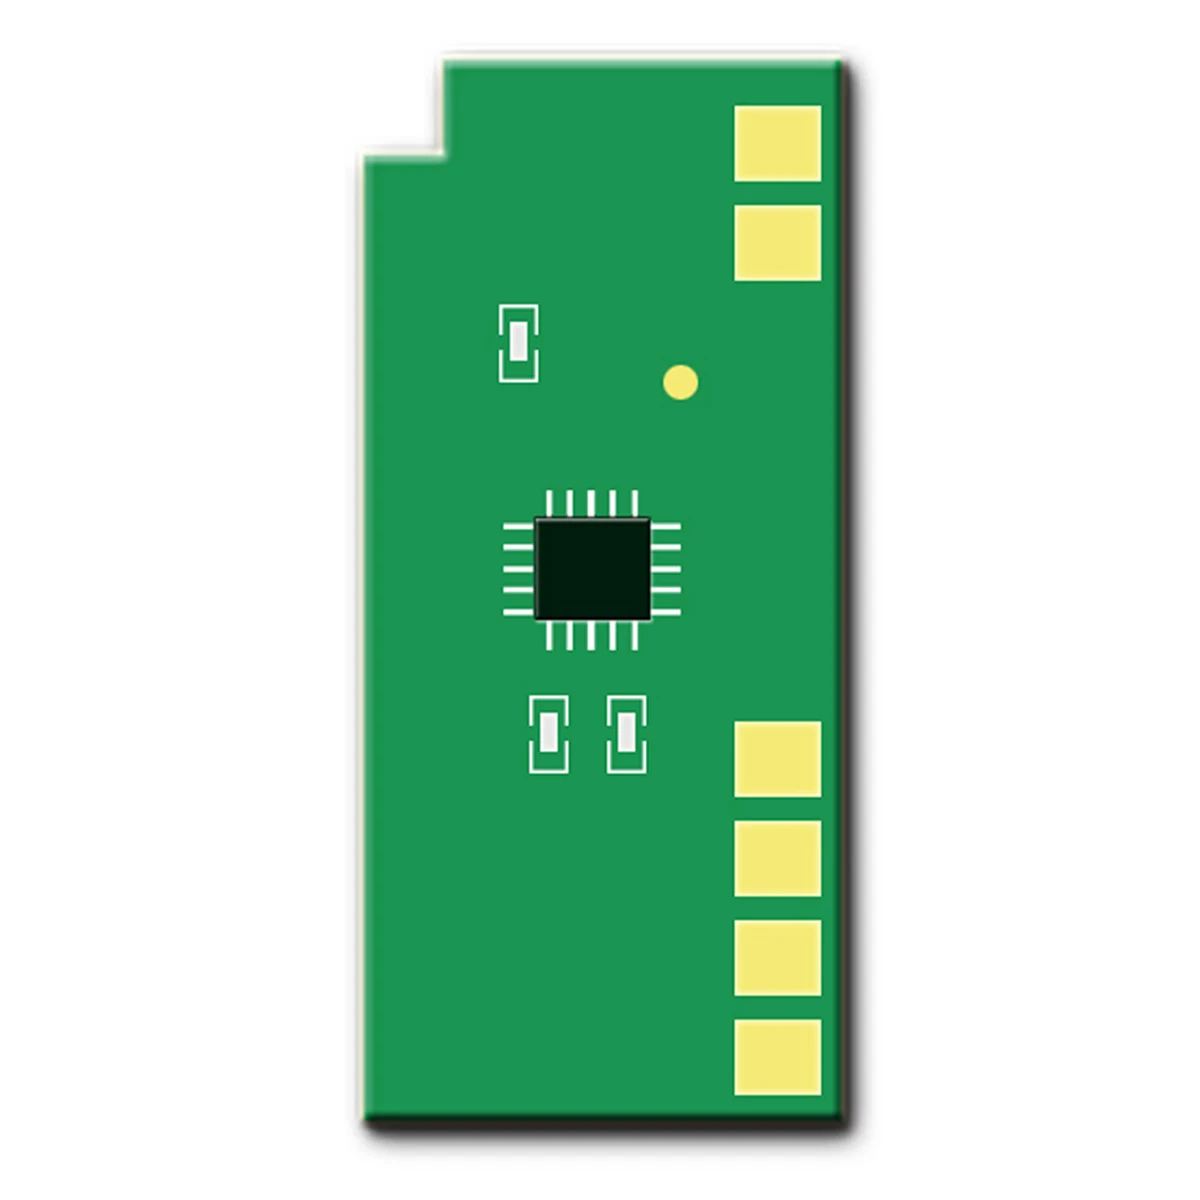 

10PCS PC-211 PC-211EV PC211 PC 211 Cartridge Toner Chip for PANTUM P2200 P2500 M6500 M6550 M6600 Printer Cartridge Chip Reset